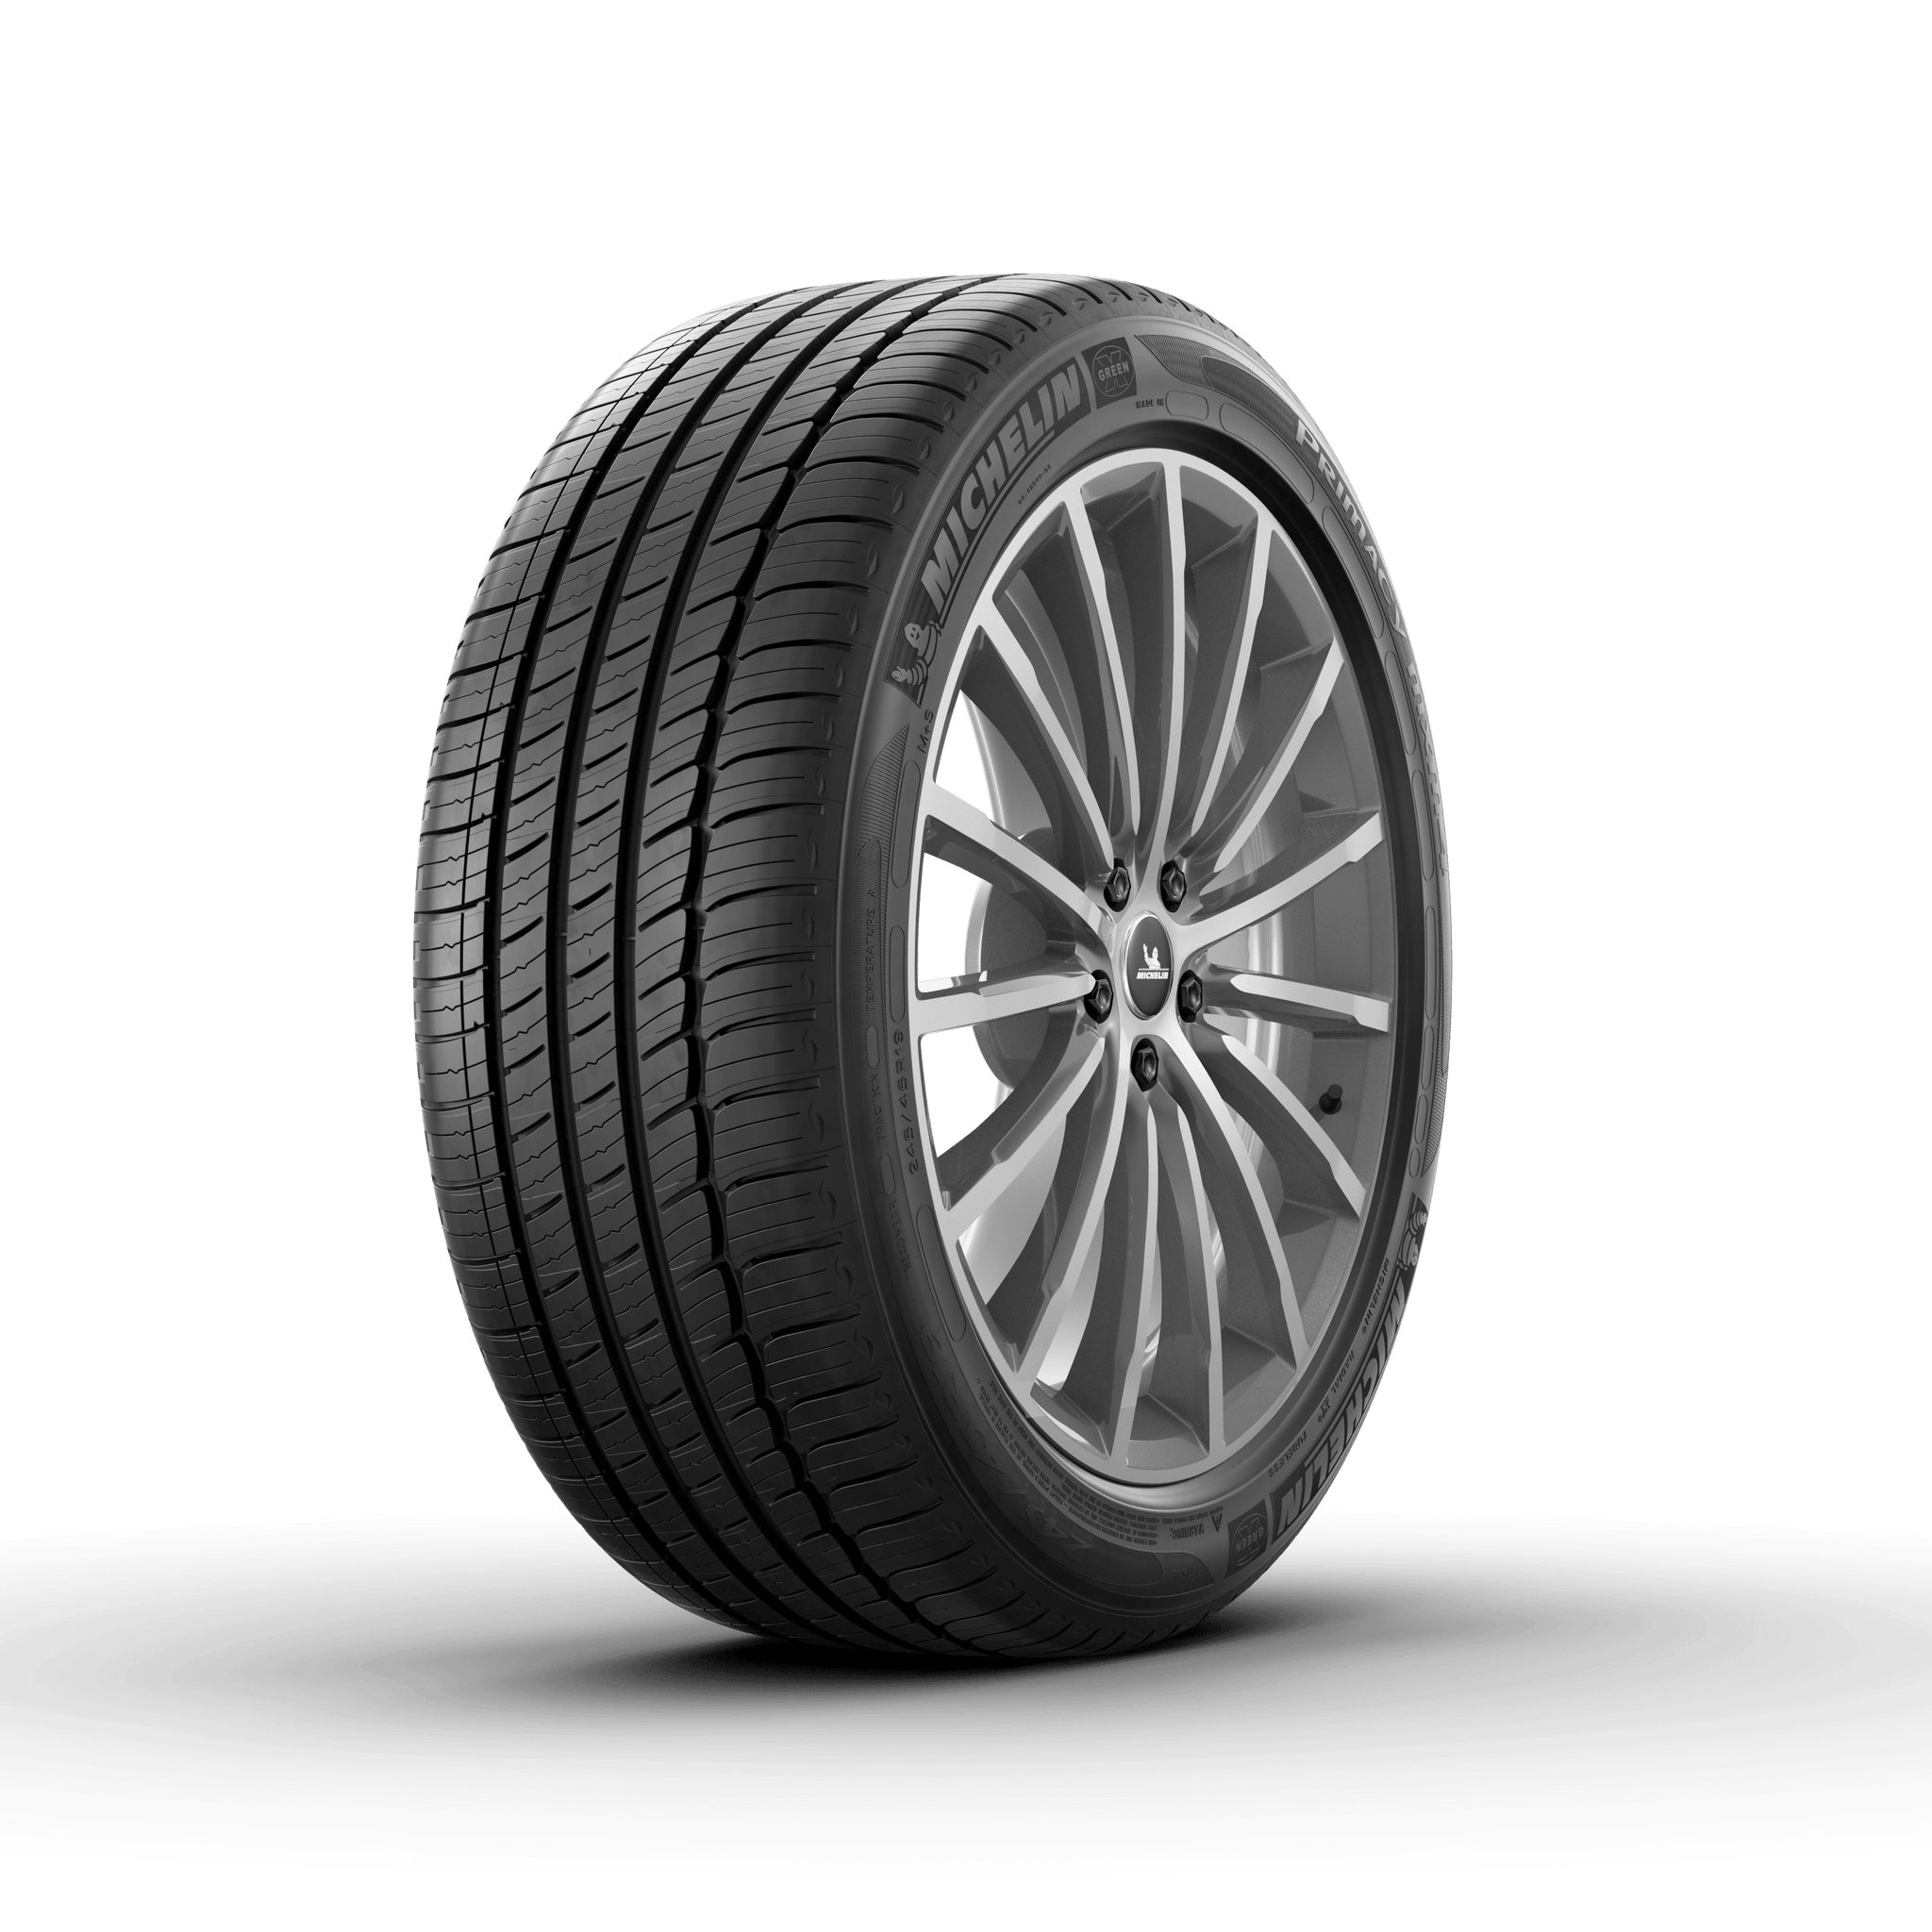 MICHELIN PRIMACY MXM4 225/50R17 (25.9X8.9R 17) Tires